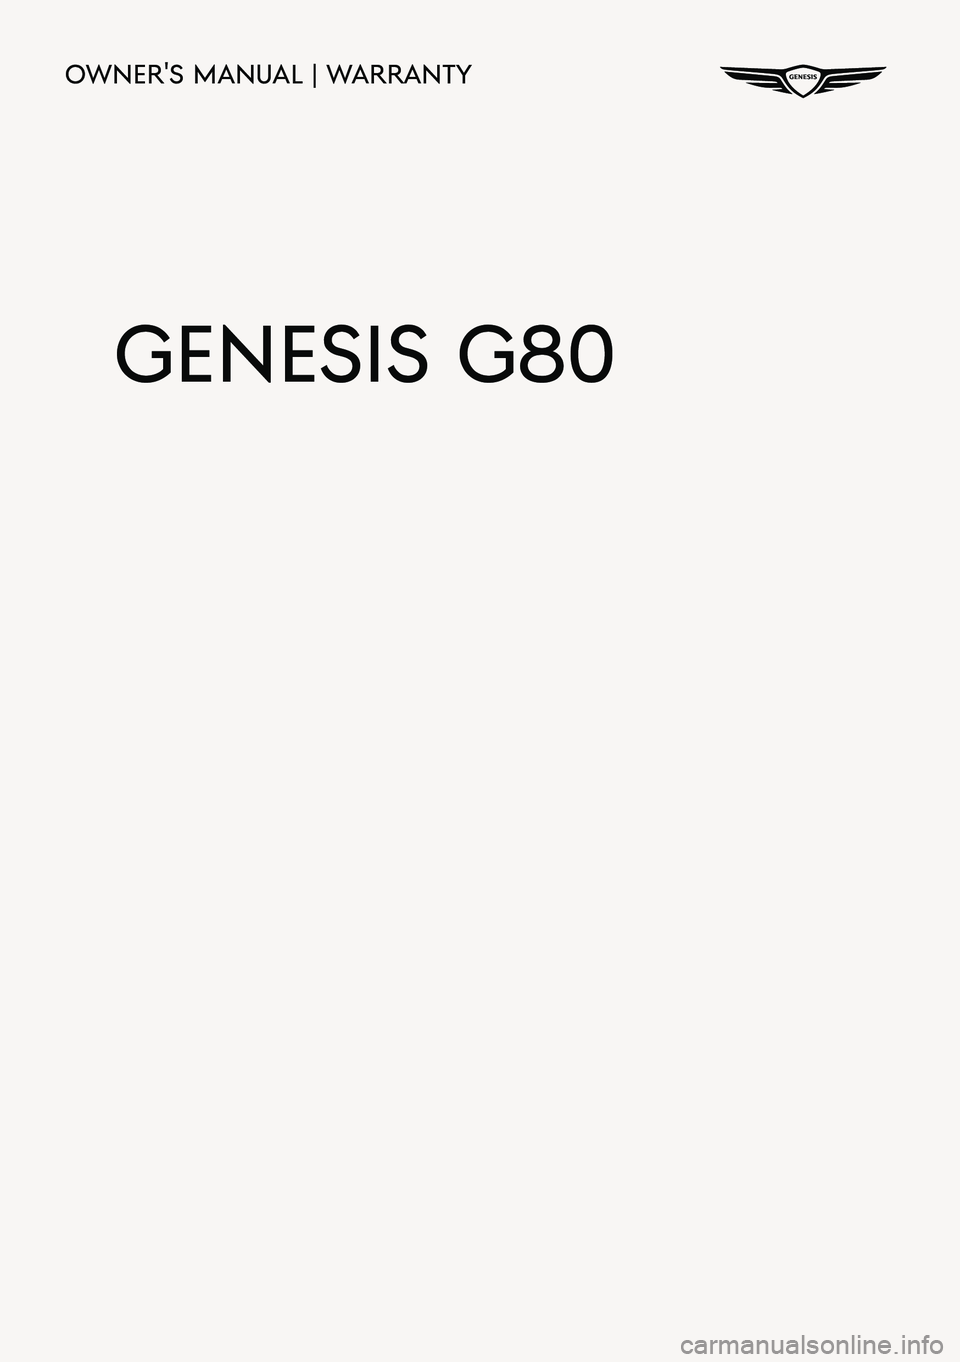 GENESIS G80 2021  Premium Navigation Manual 
OWARRANTY
GENESIS G80  